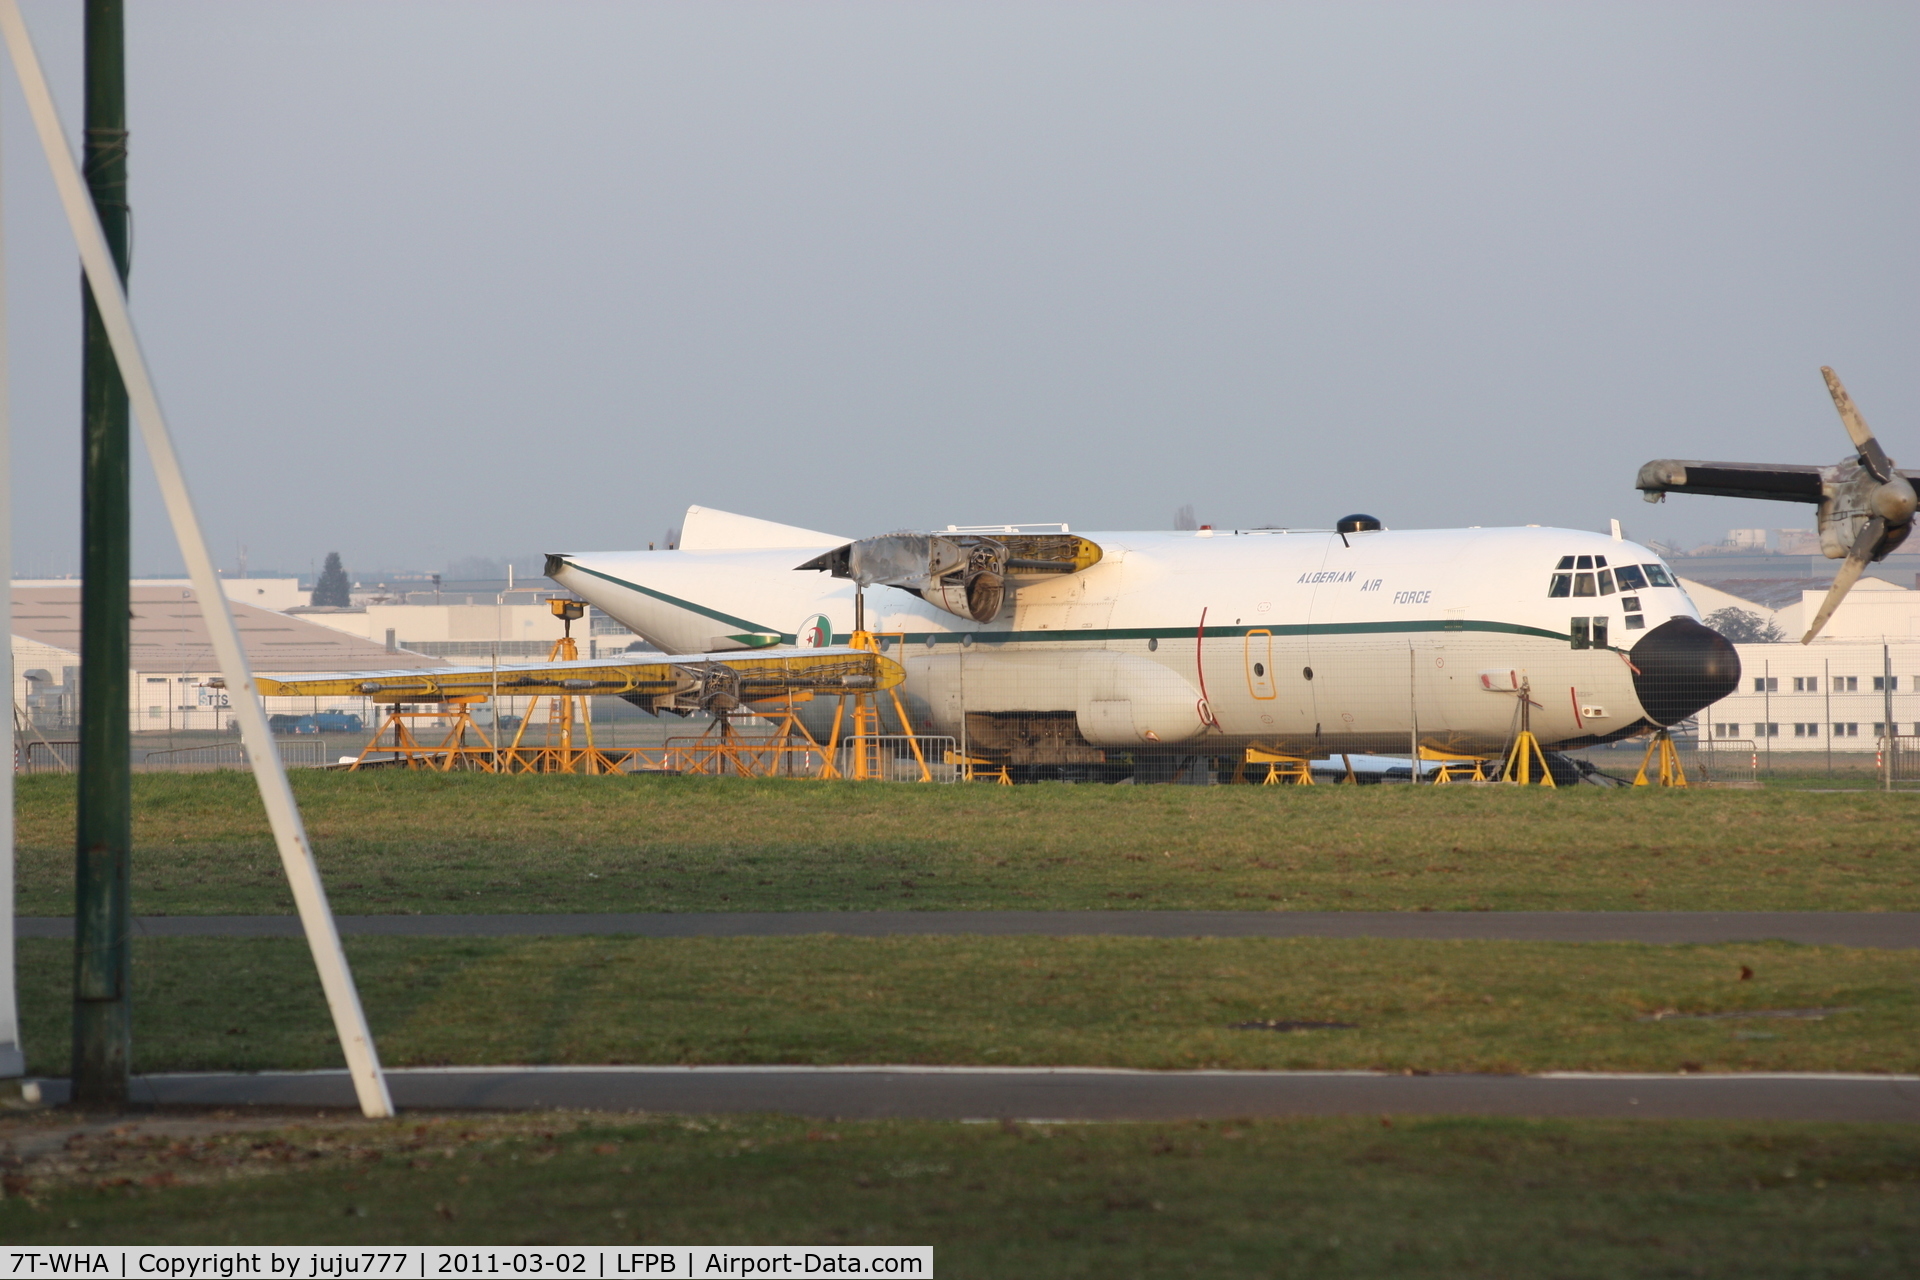 7T-WHA, 1984 Lockheed C-130H-30 Hercules C/N 382-4997, disasembled for transport